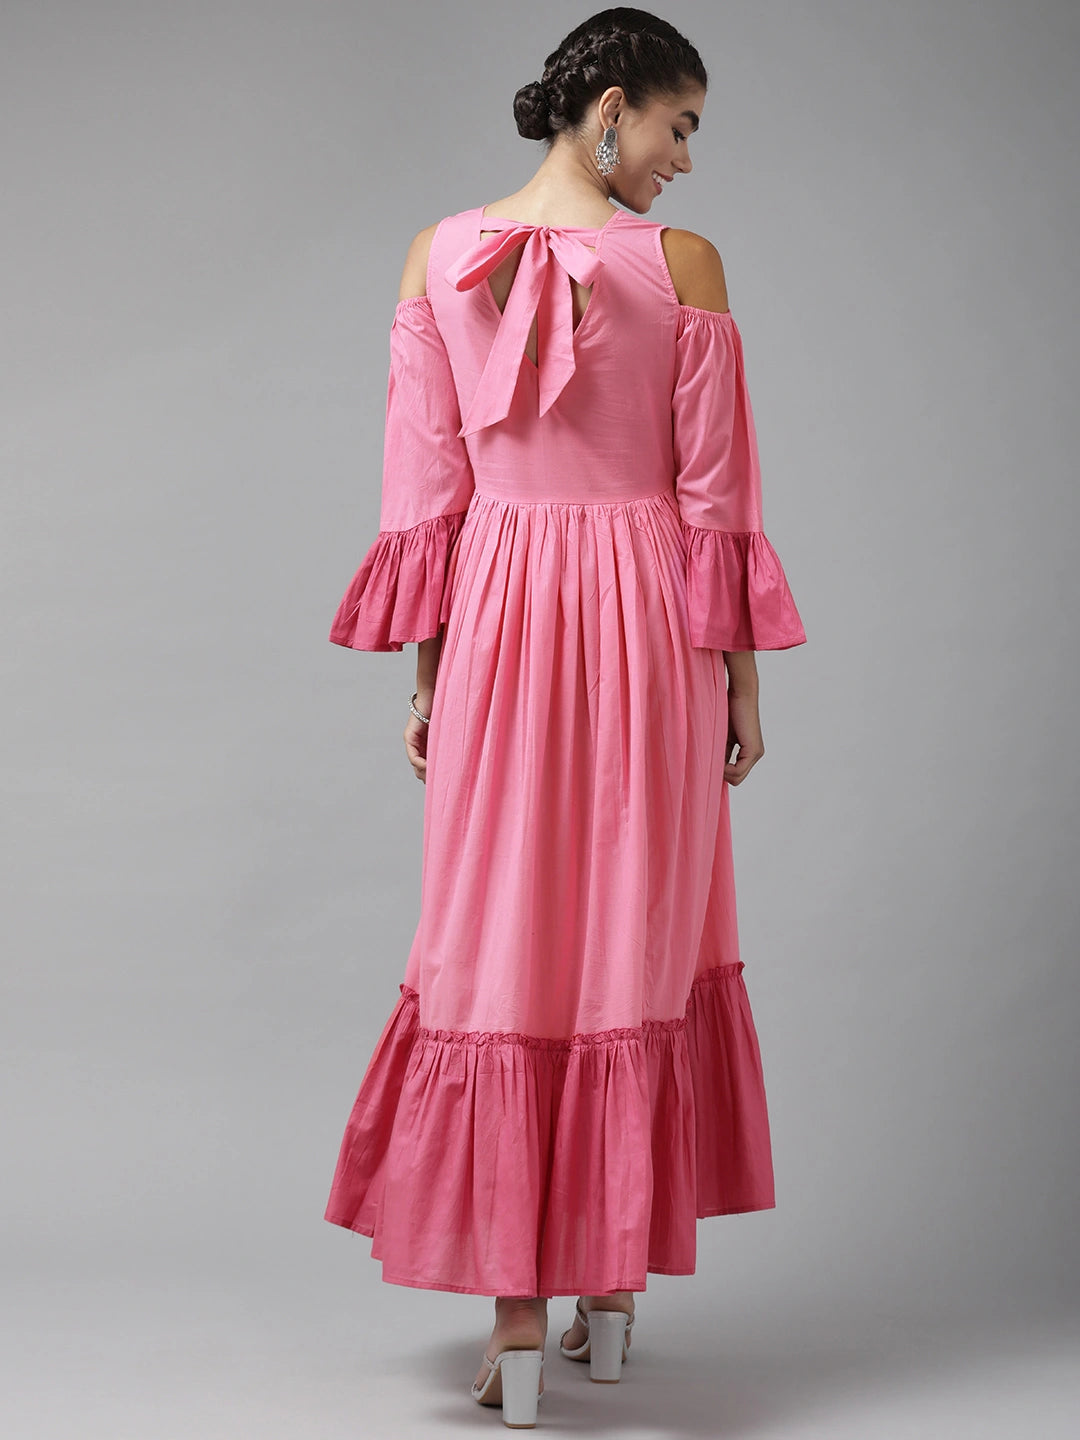 Yufta Pink Ethnic Maxi Dress-Yufta Store-9658DRSPKS